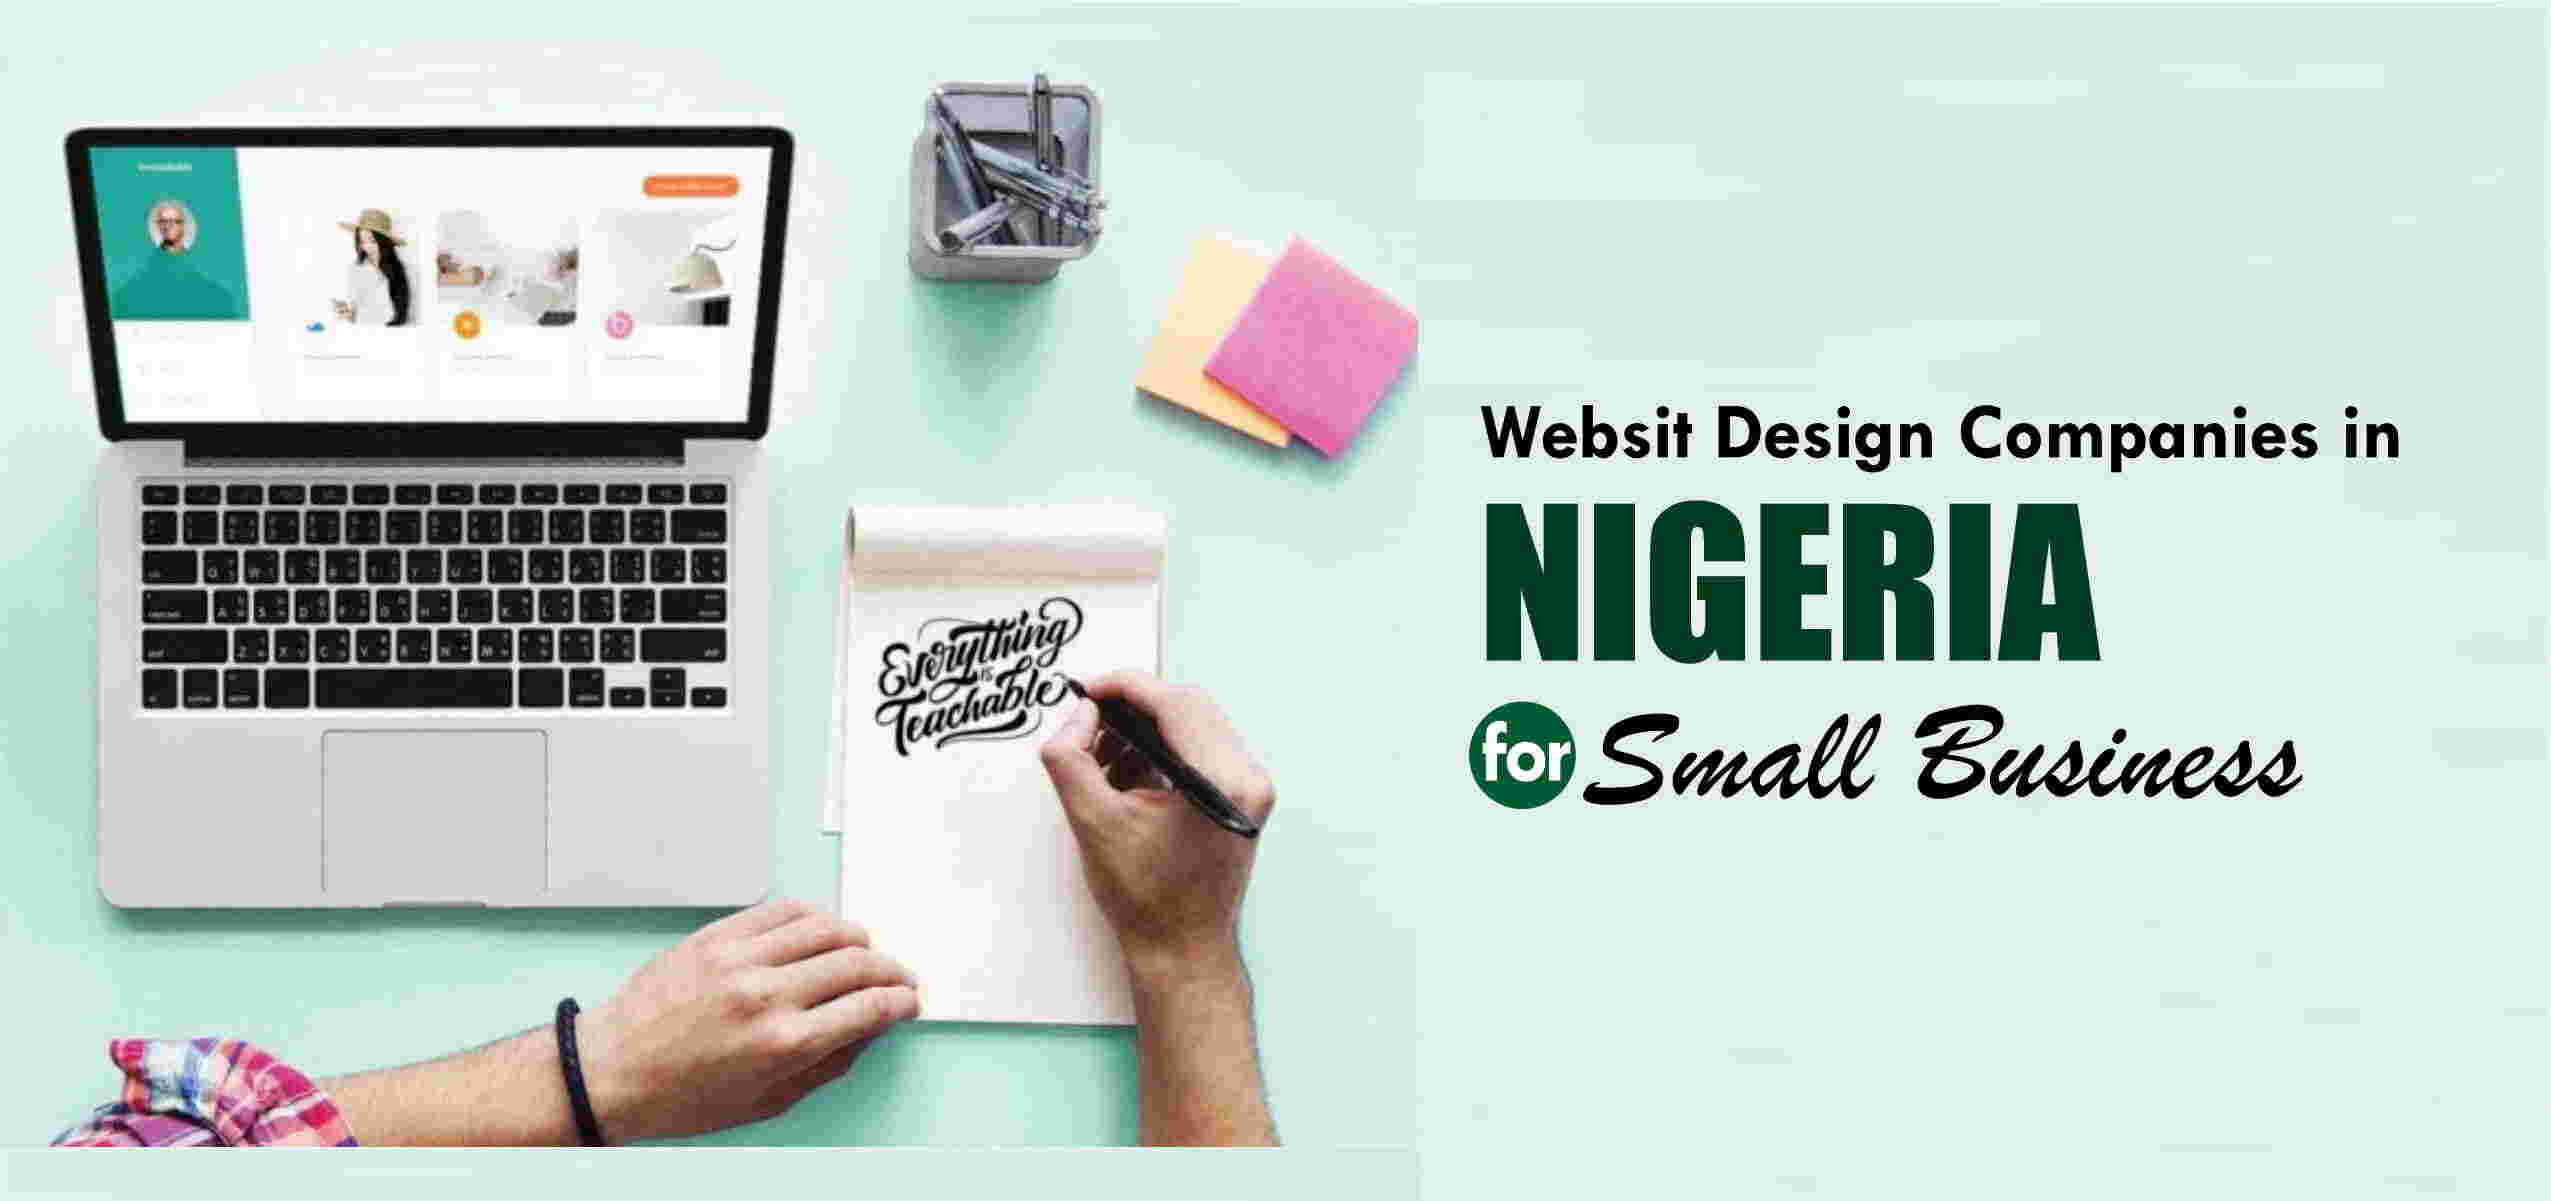 Web design companies in Nigeria